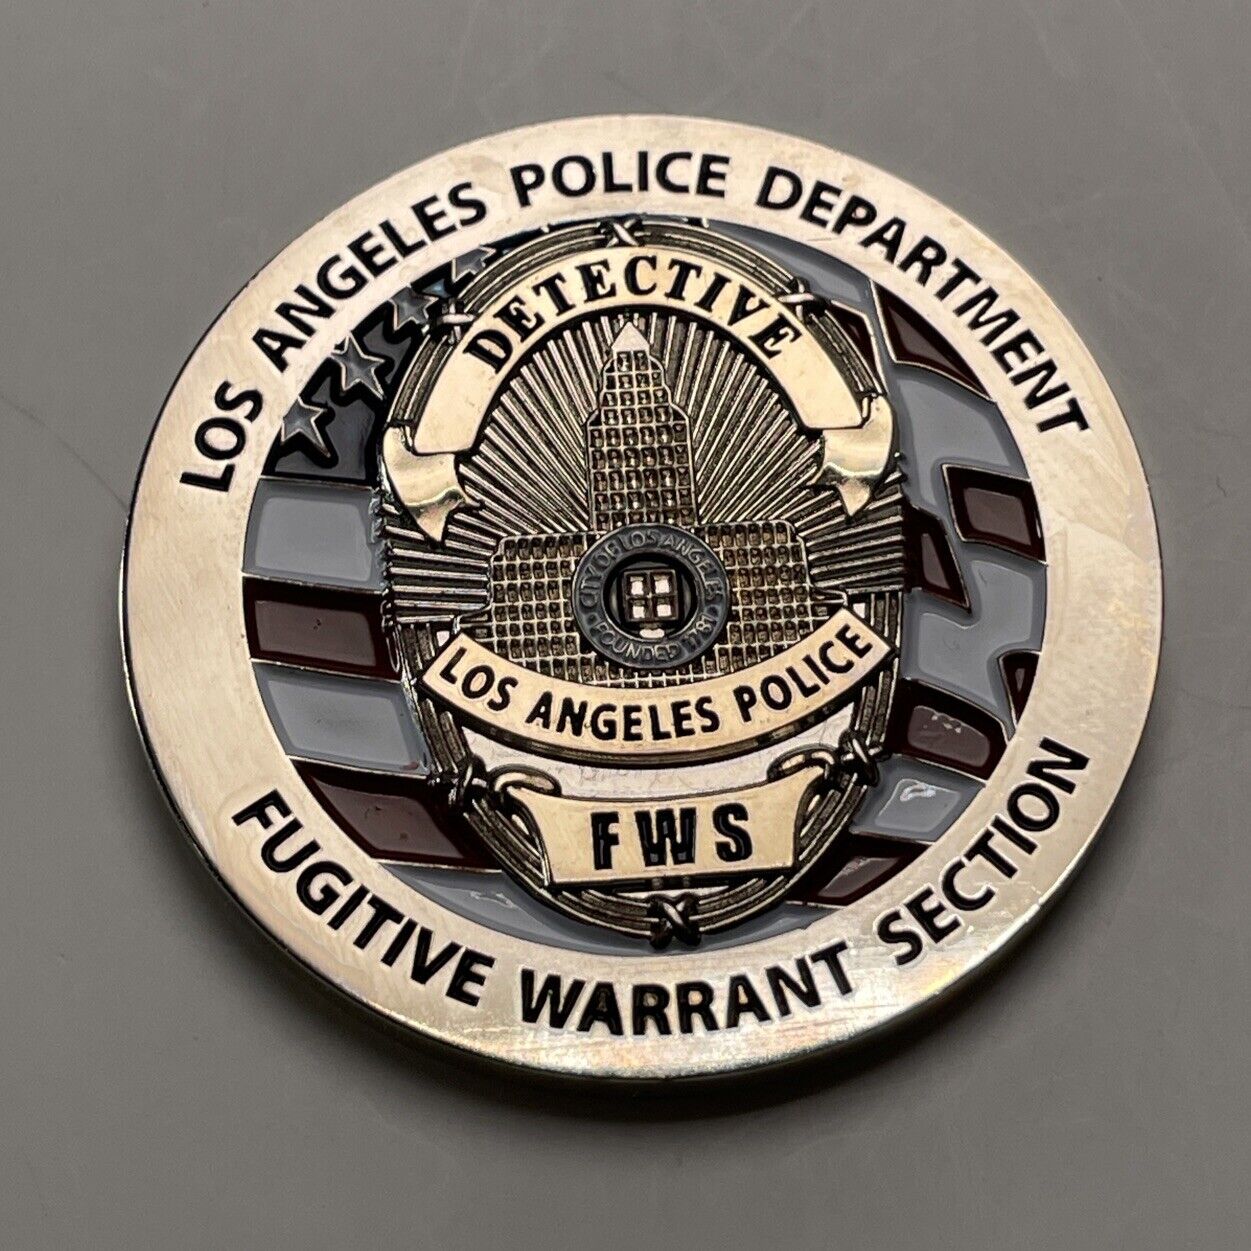 Los Angeles Police Dept Detective Fugitive Warrant Section FWS Challenge Coin